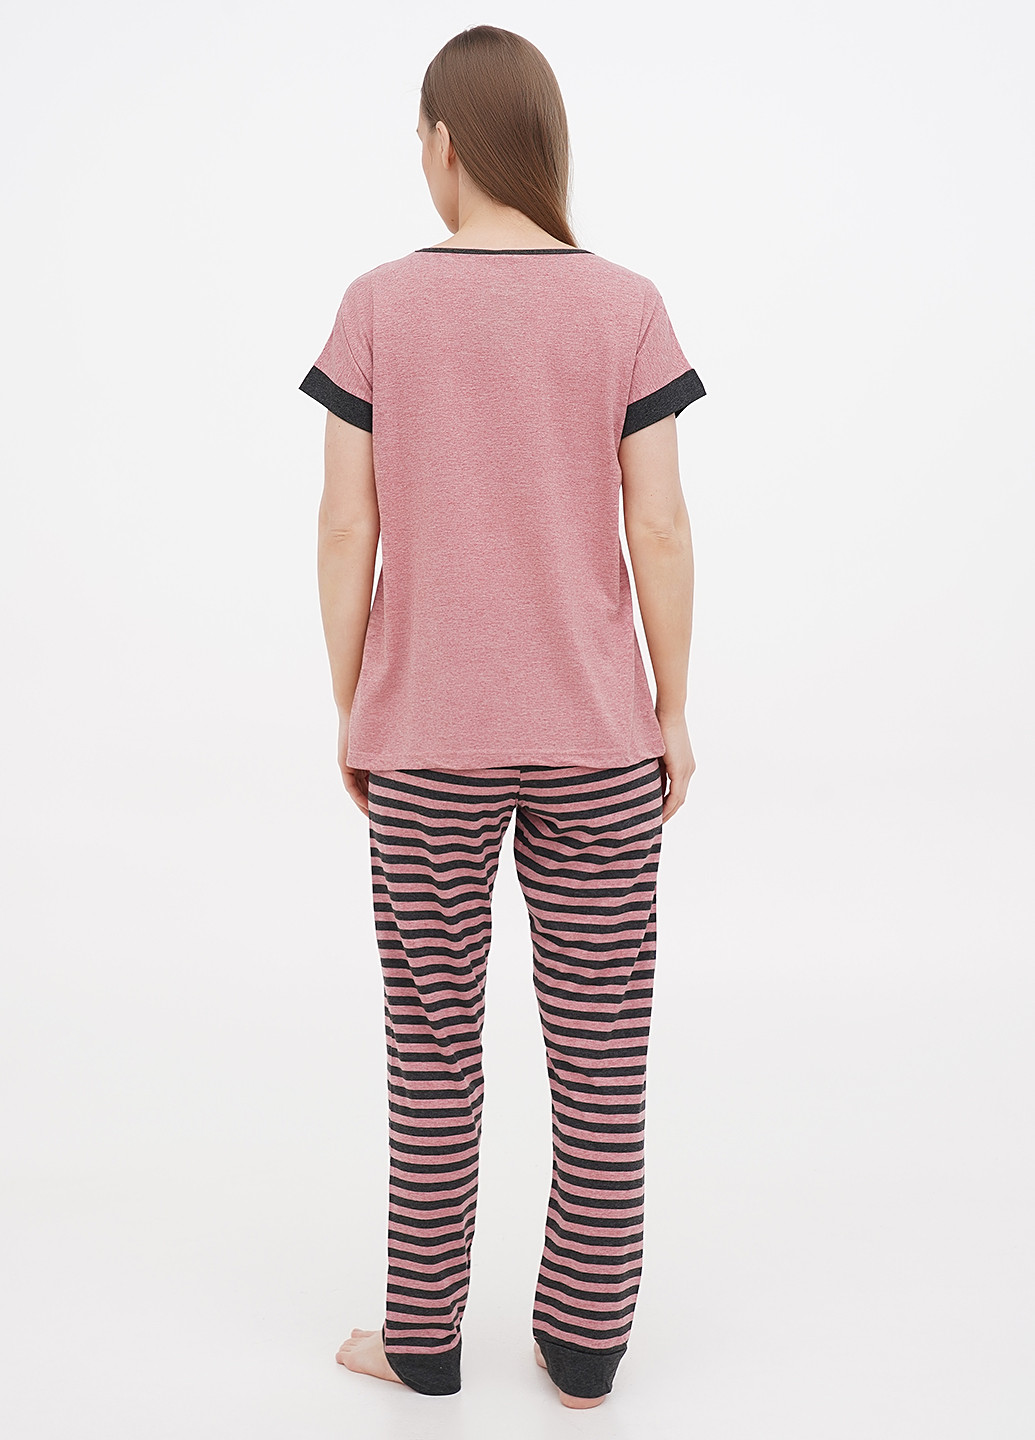 Темно-розовая всесезон пижама (футболка, брюки) футболка + брюки Sexen